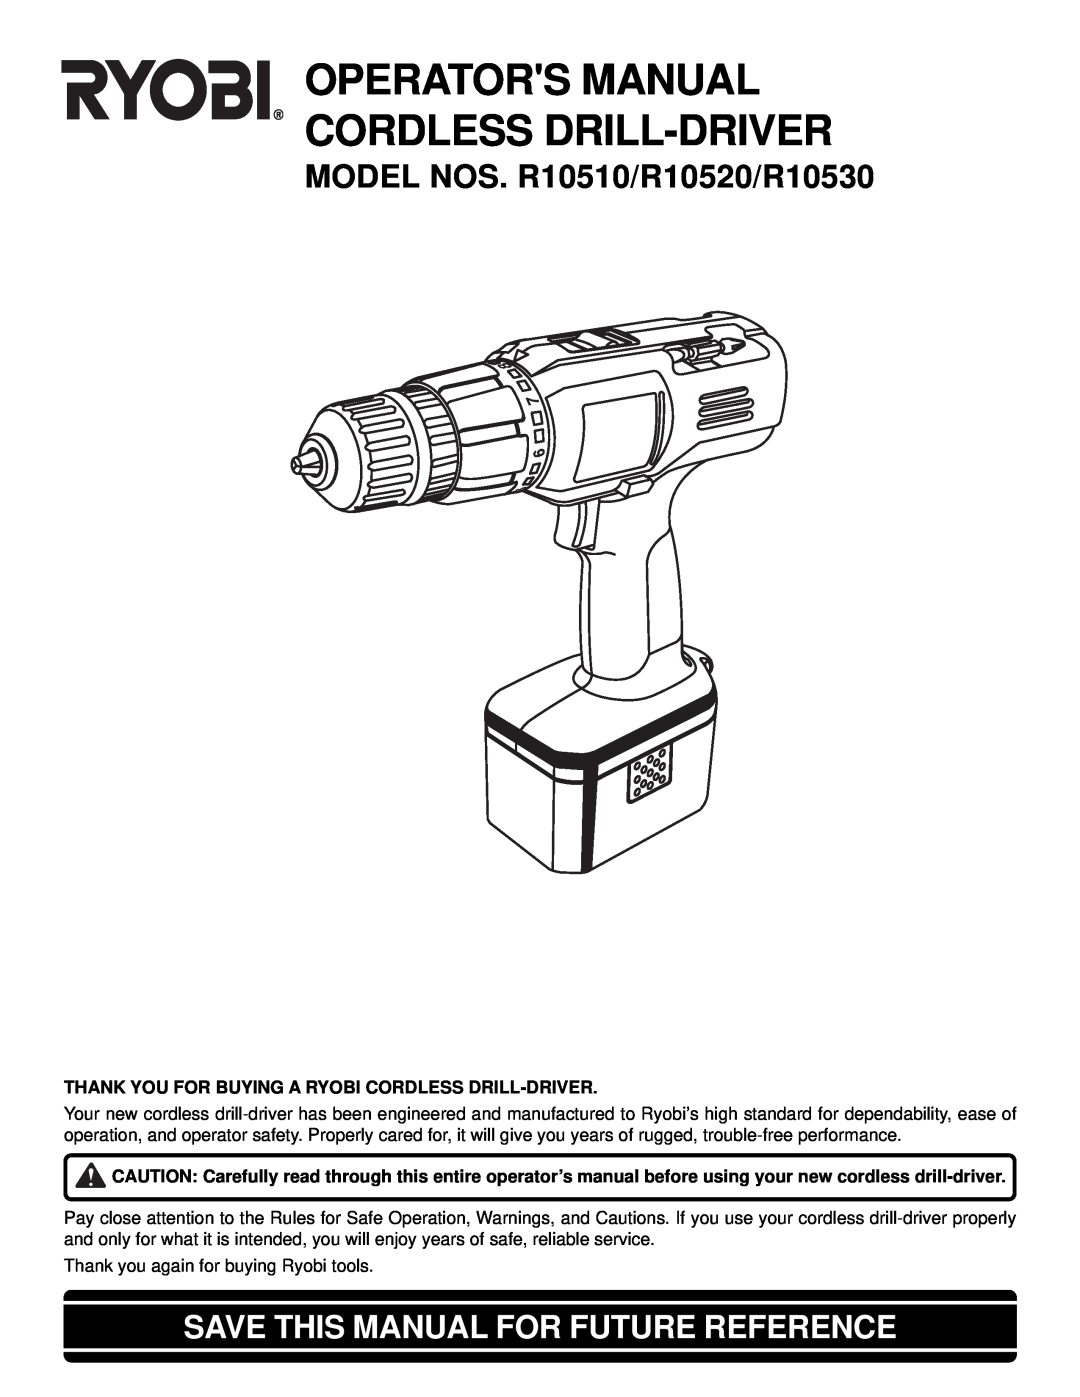 Ryobi manual Operators Manual Cordless Drill-Driver, MODEL NOS. R10510/R10520/R10530 